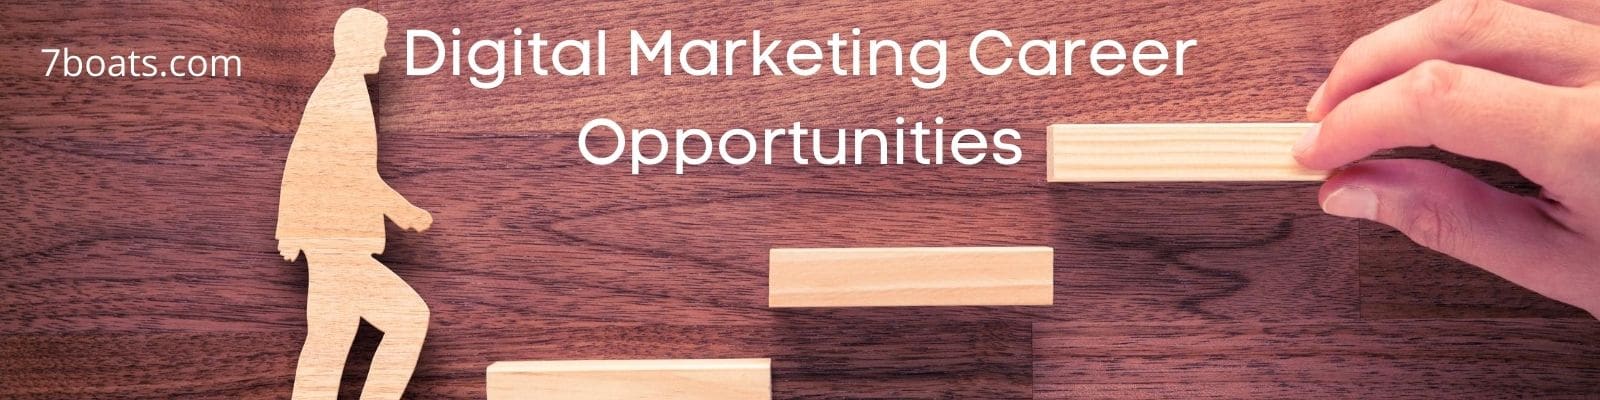 Digital Marketing Career Opportunities - Seven Boats India